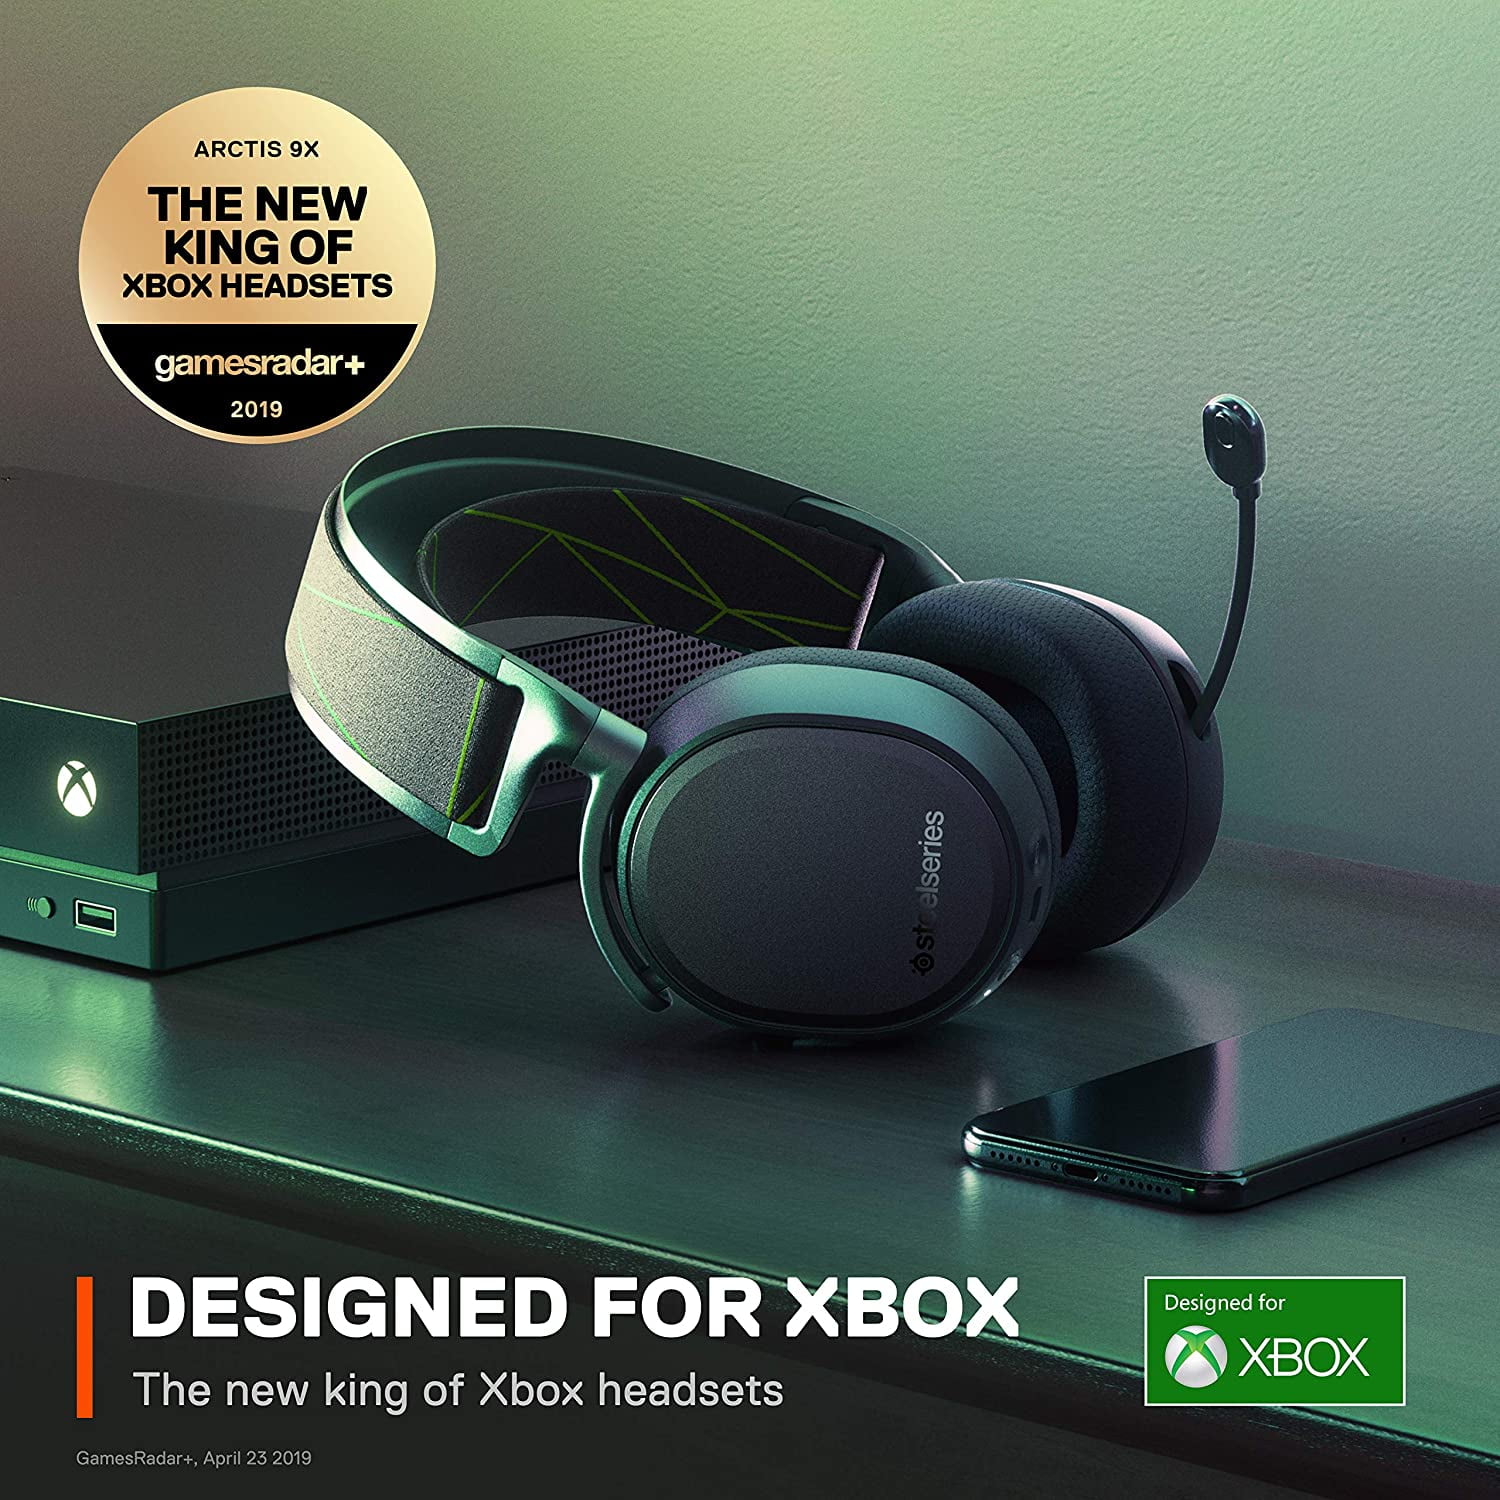 Kansen commando Tegenstrijdigheid SteelSeries Arctis 9X Wireless Gaming Headset for Xbox - Walmart.com